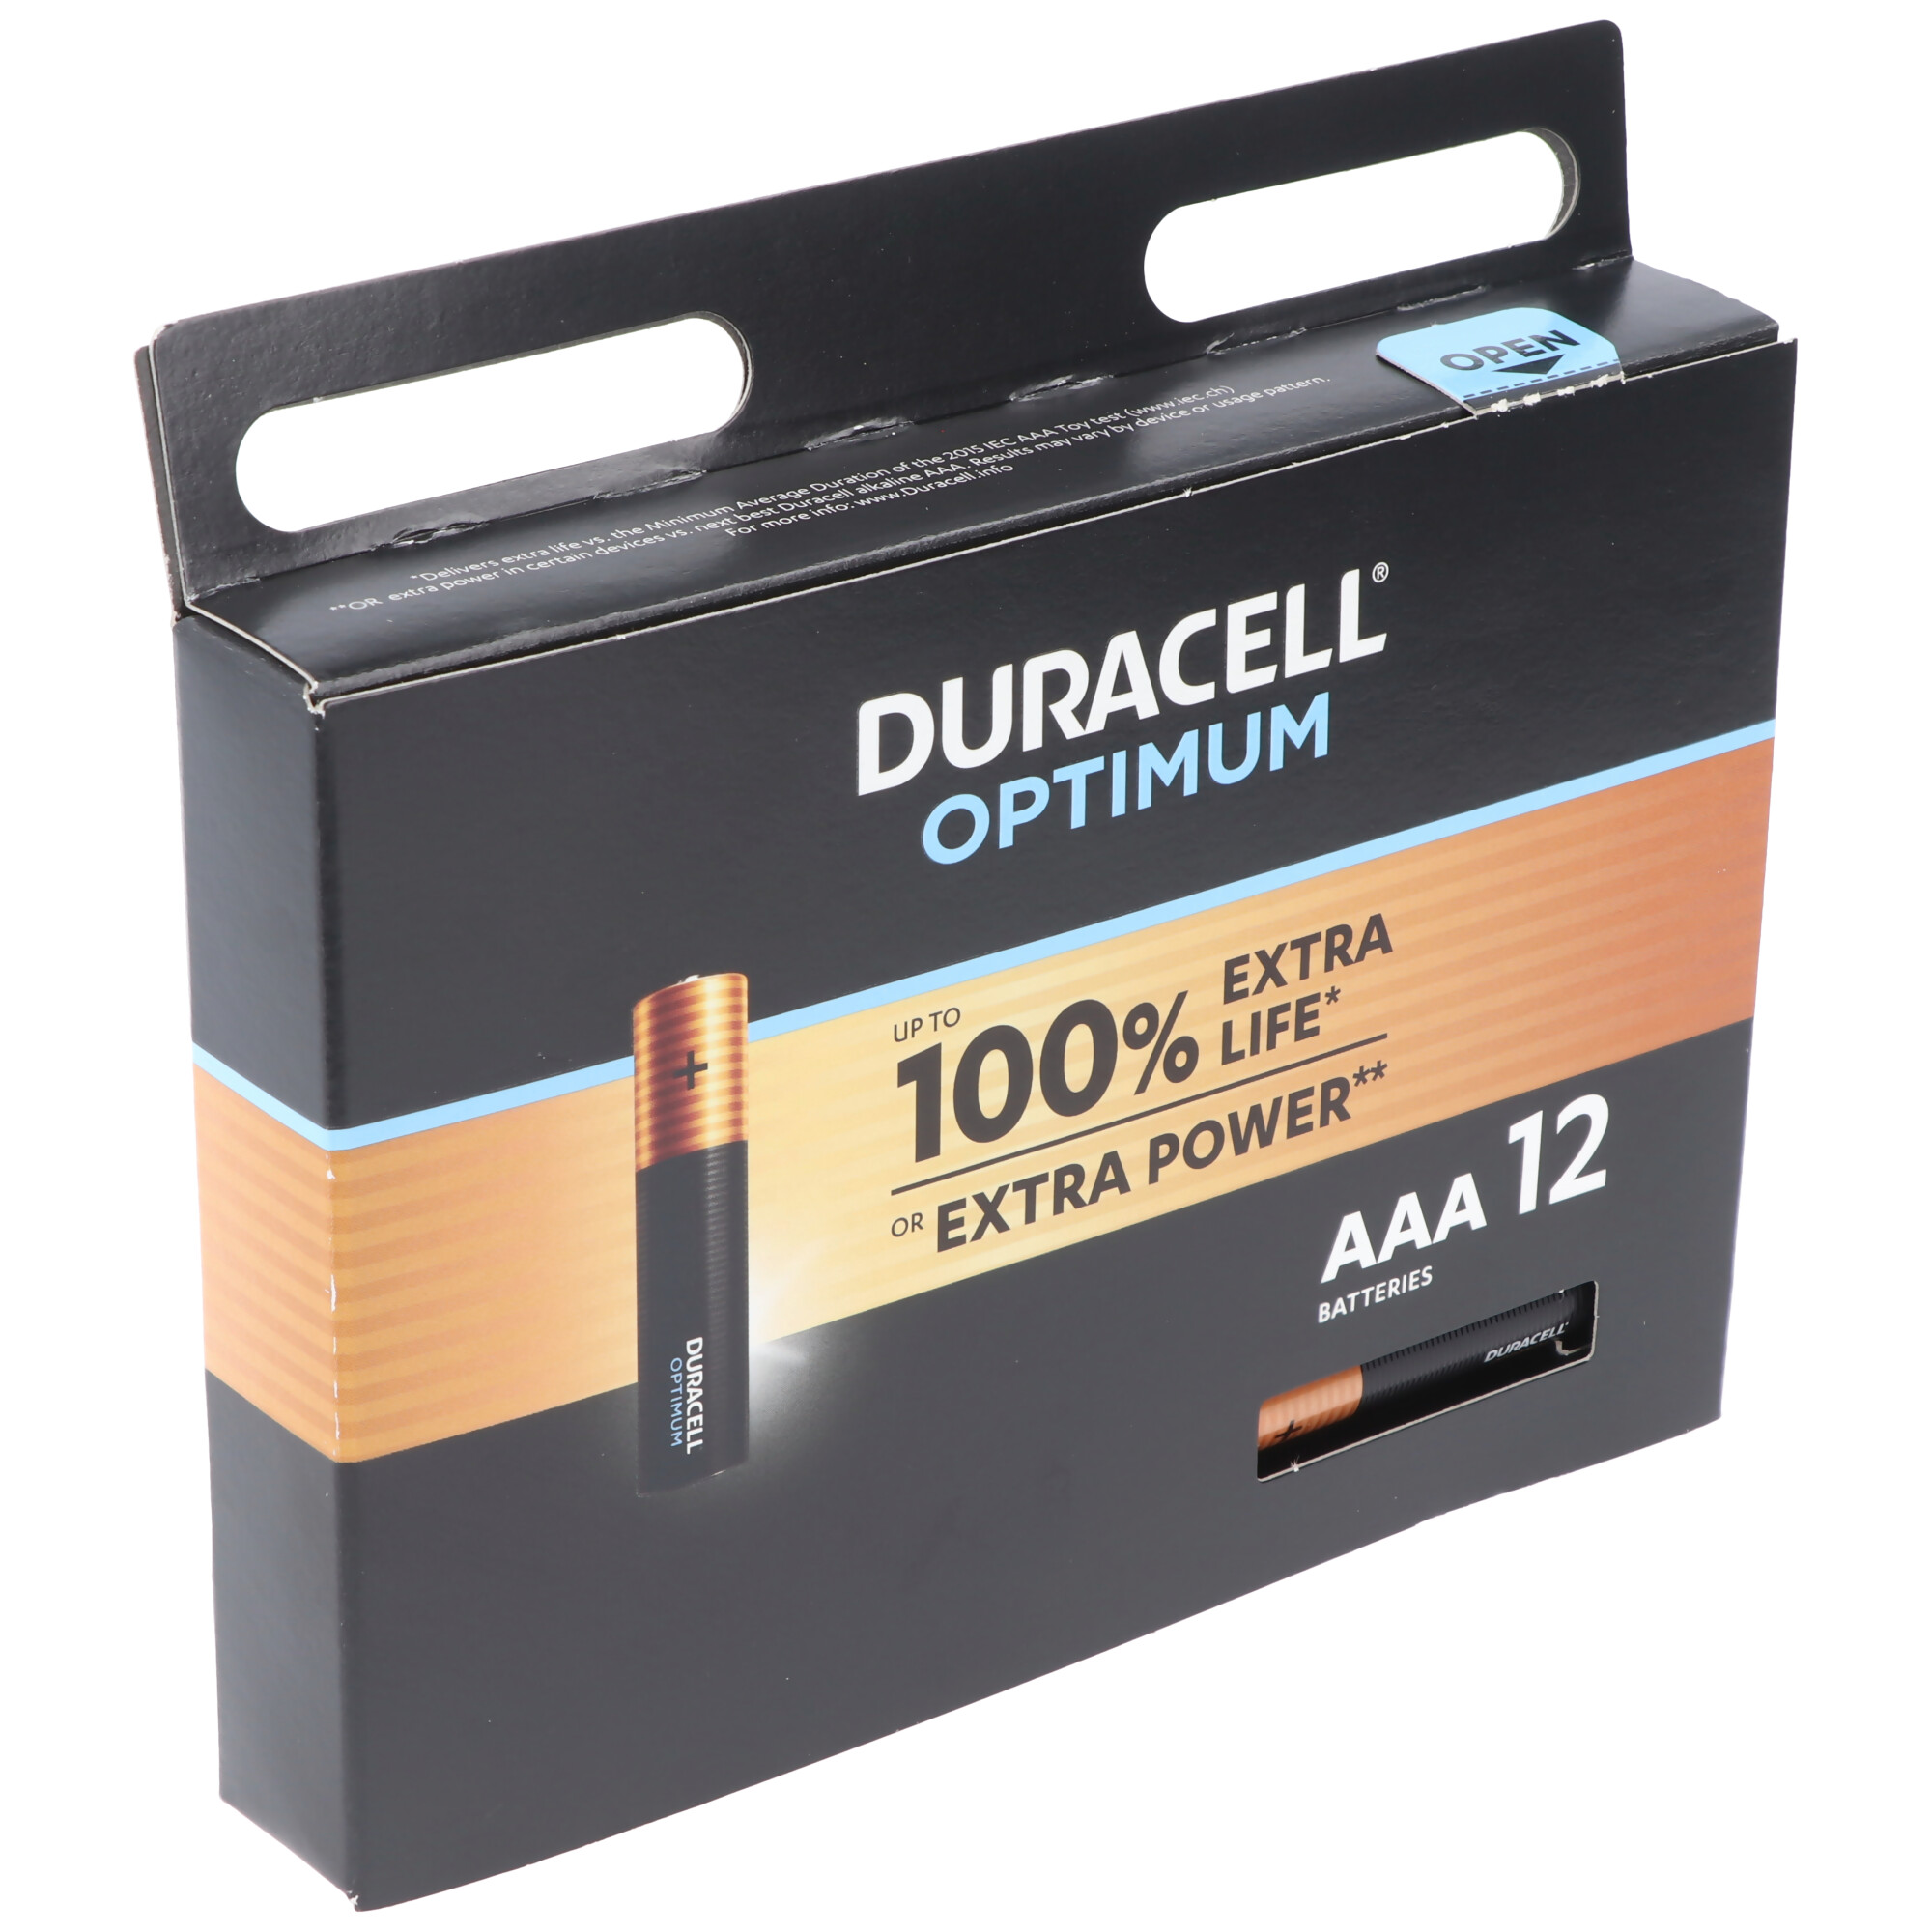 Duracell Optimum - Lot 12 Piles AAA Longue Duré, Emballage